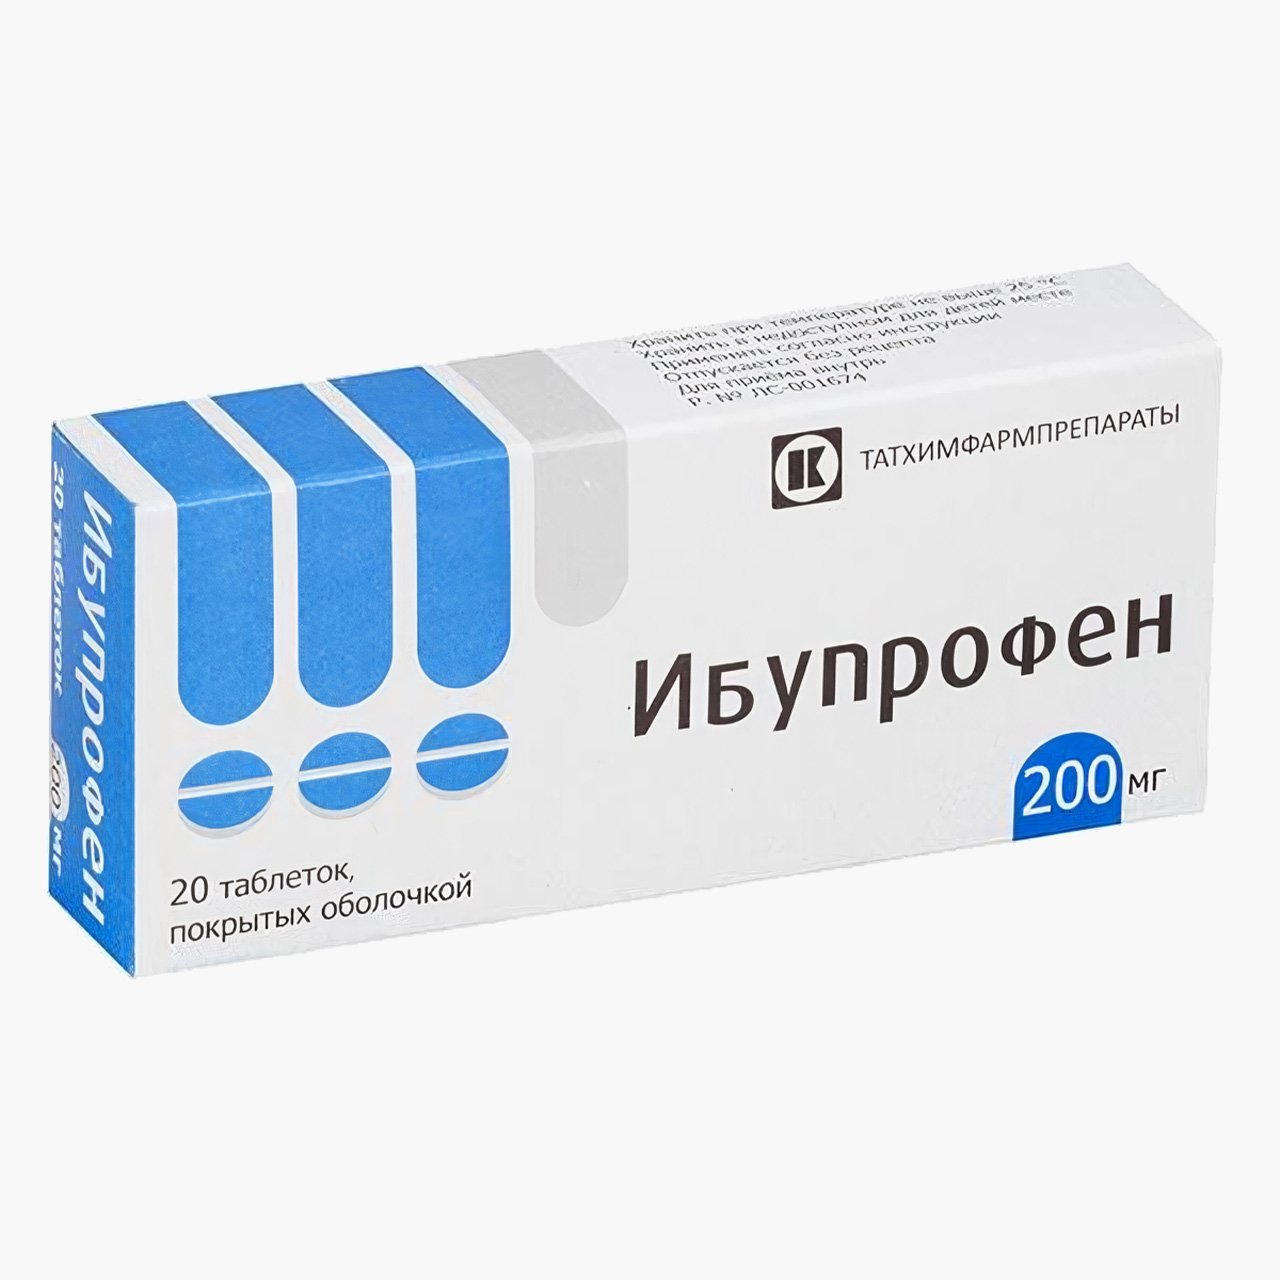 Ибупрофен в таблетках. Источник: eapteka.ru